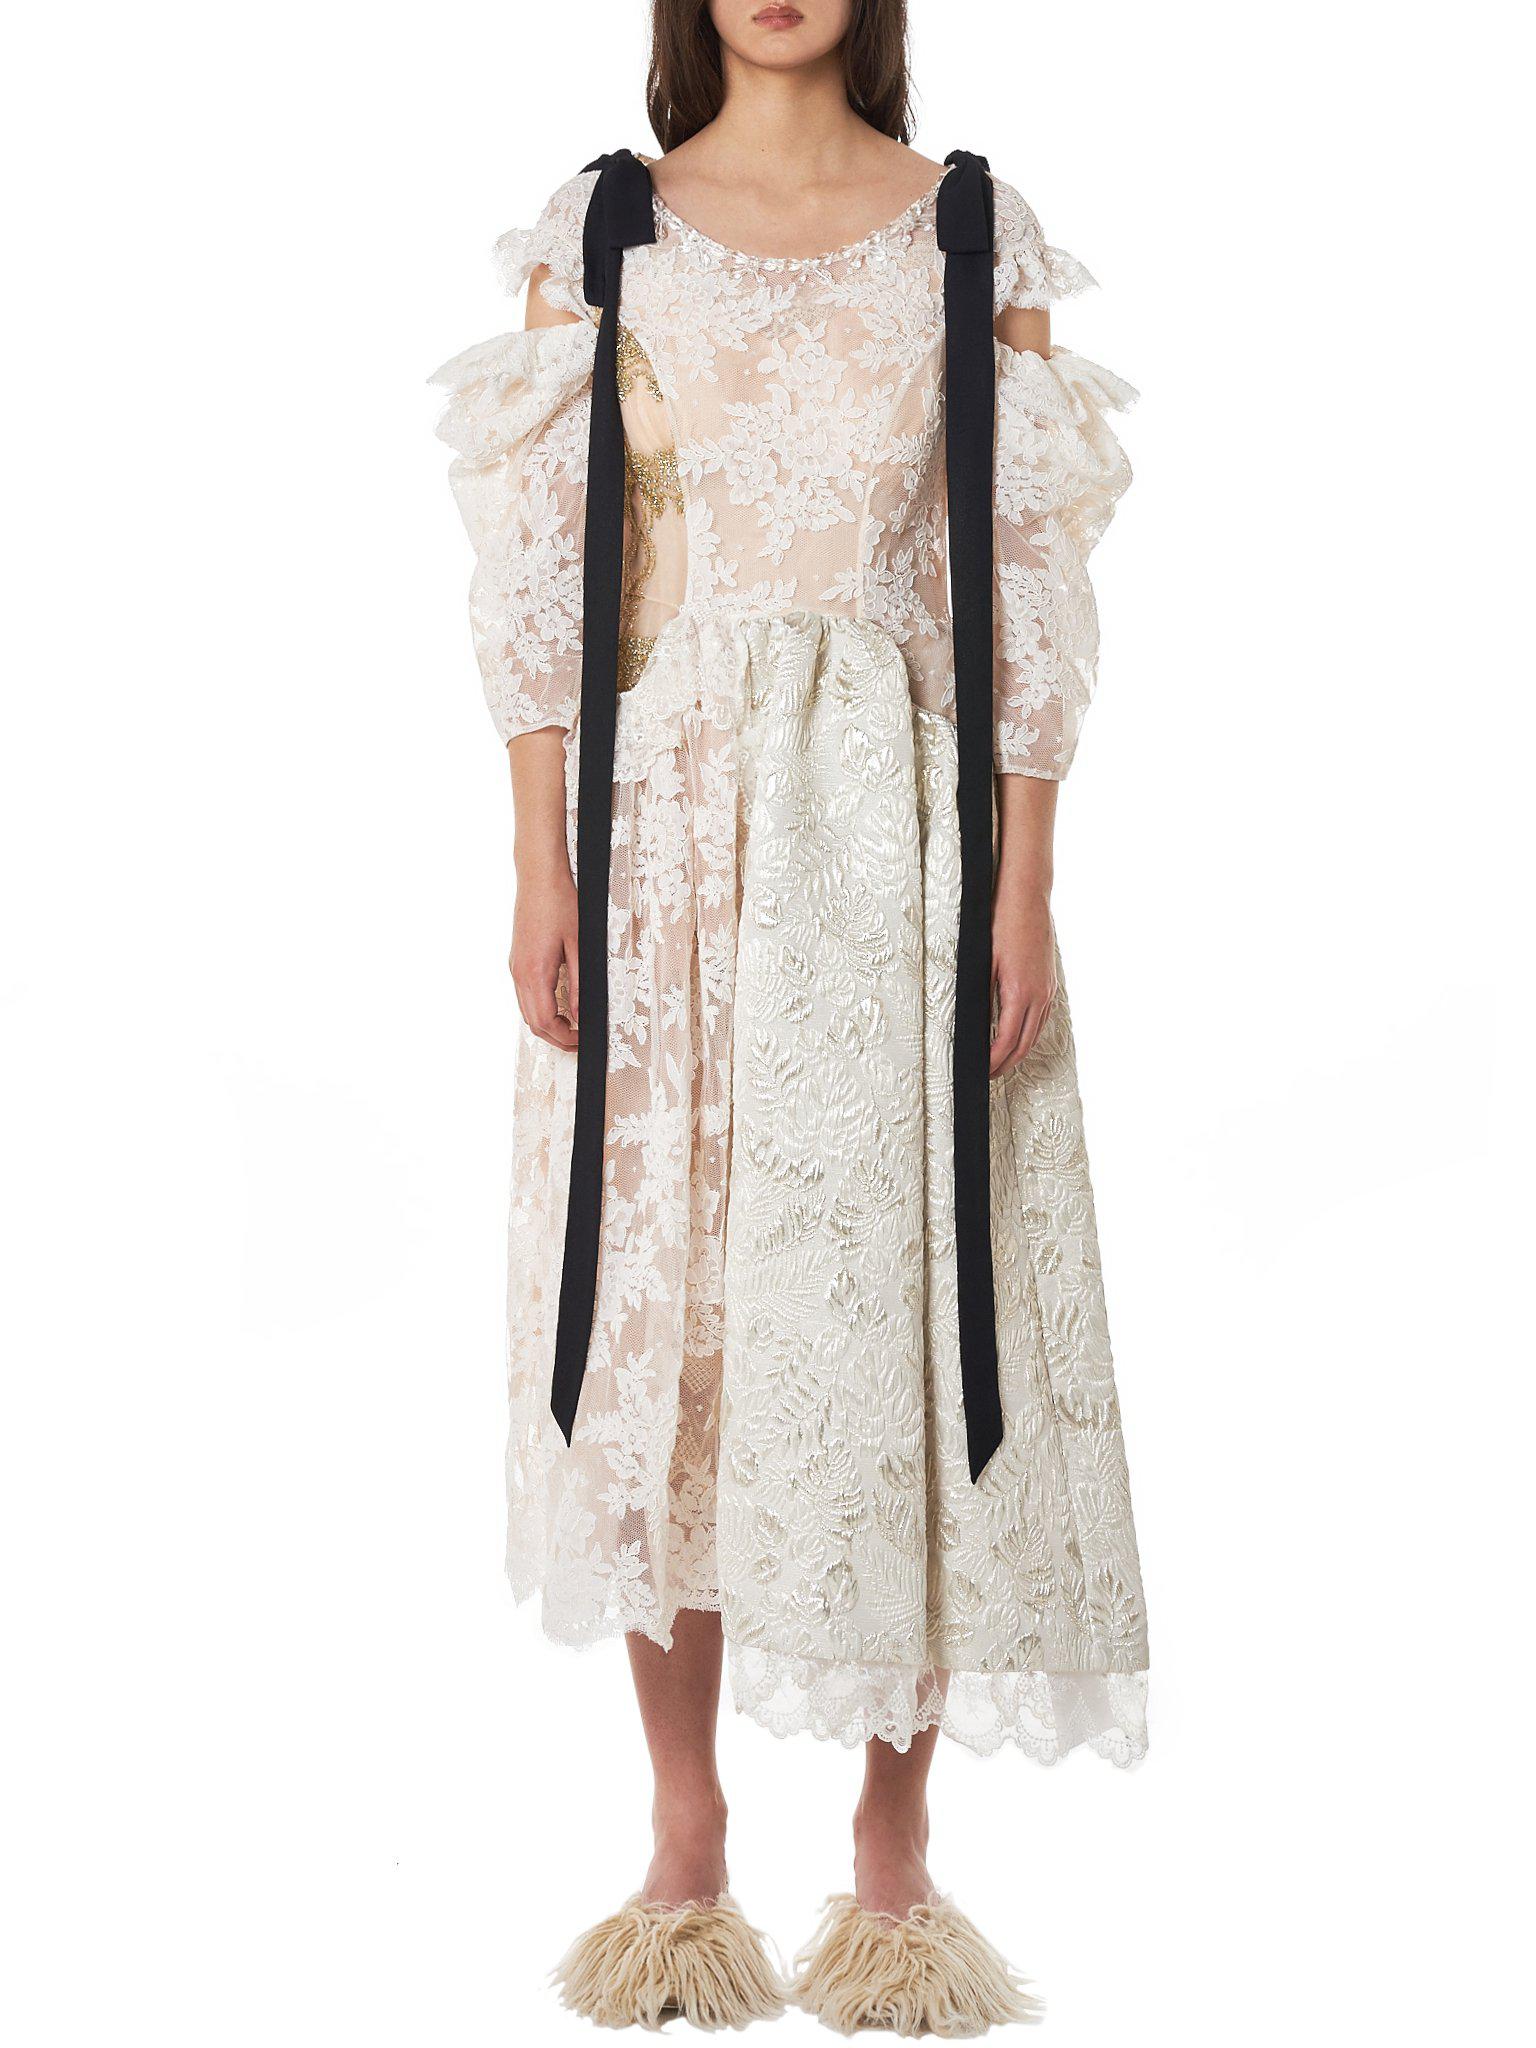 Simone Rocha Lace Ribbon Shoulder Brocade Dress in White - Lyst